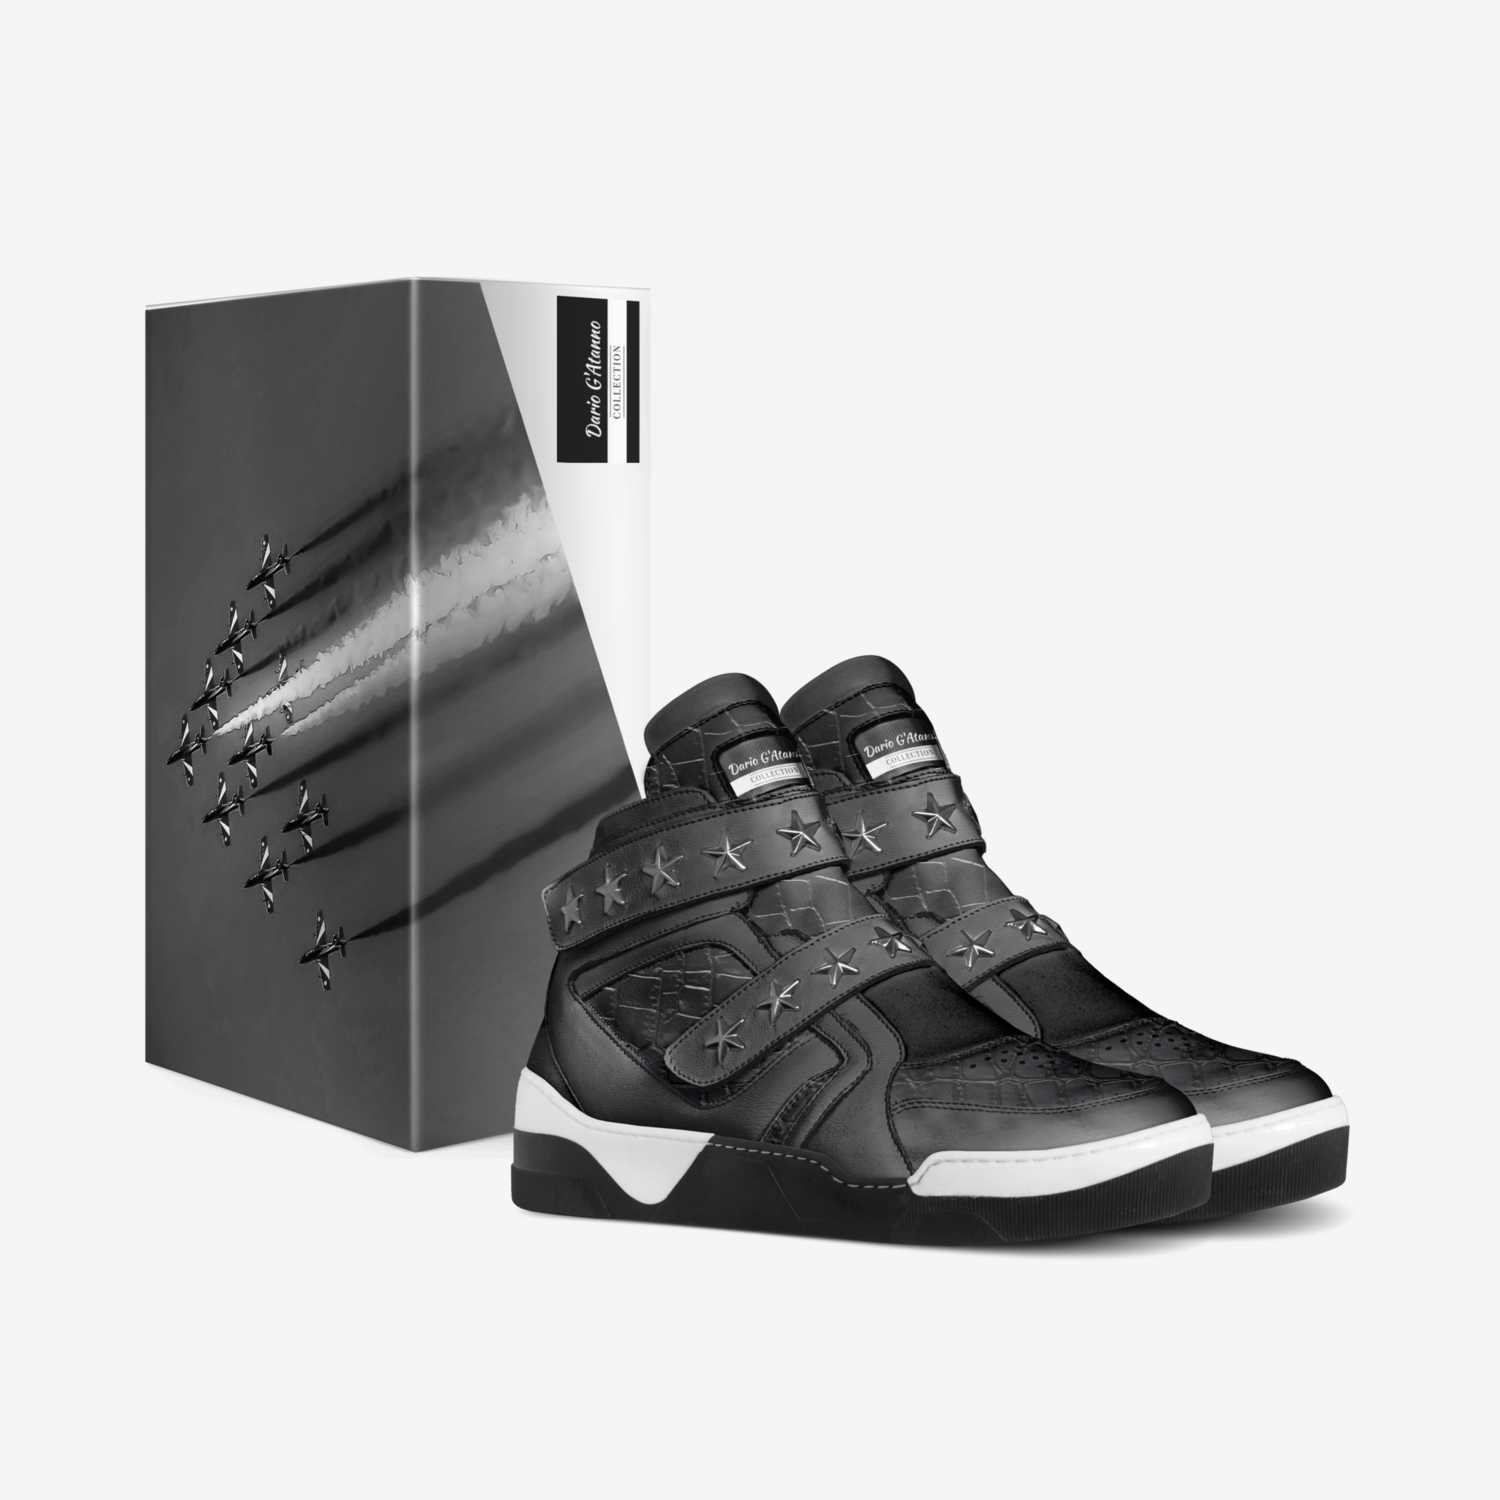 Dario G'Atanno custom made in Italy shoes by Darel Wesley | Box view